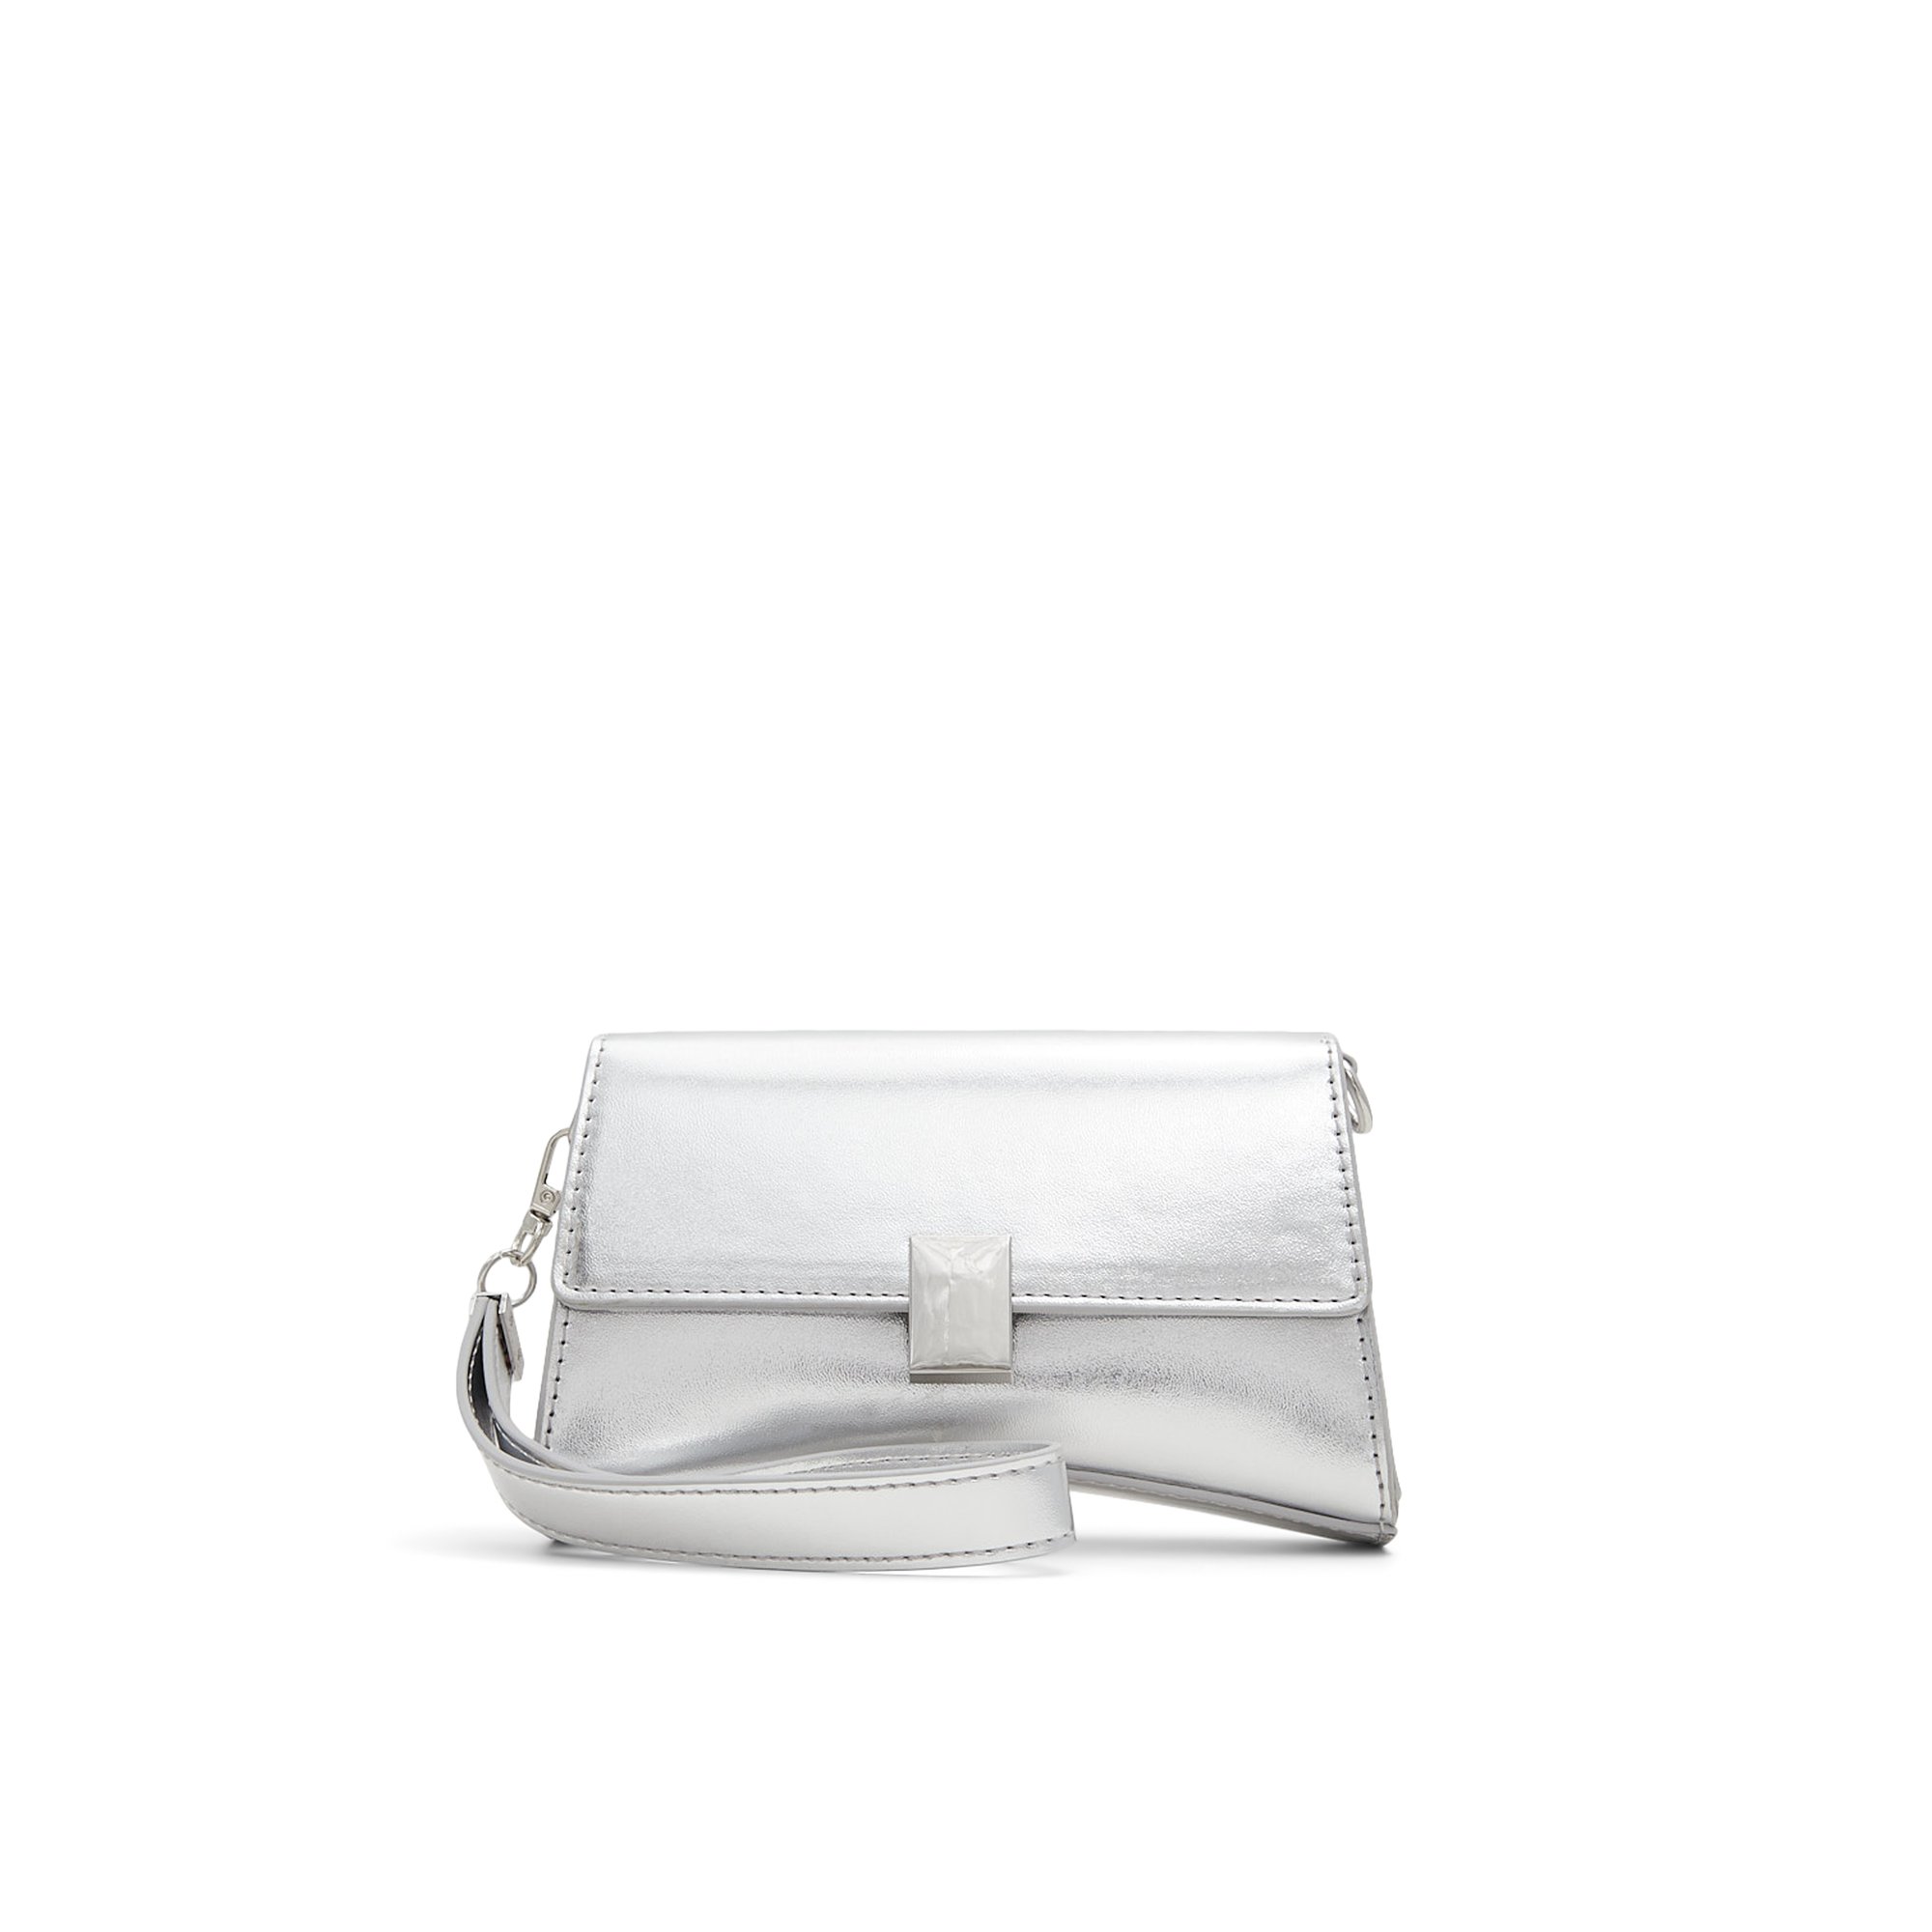 ALDO Cleeox - Women's Clutches & Evening Bag Handbag - Silver